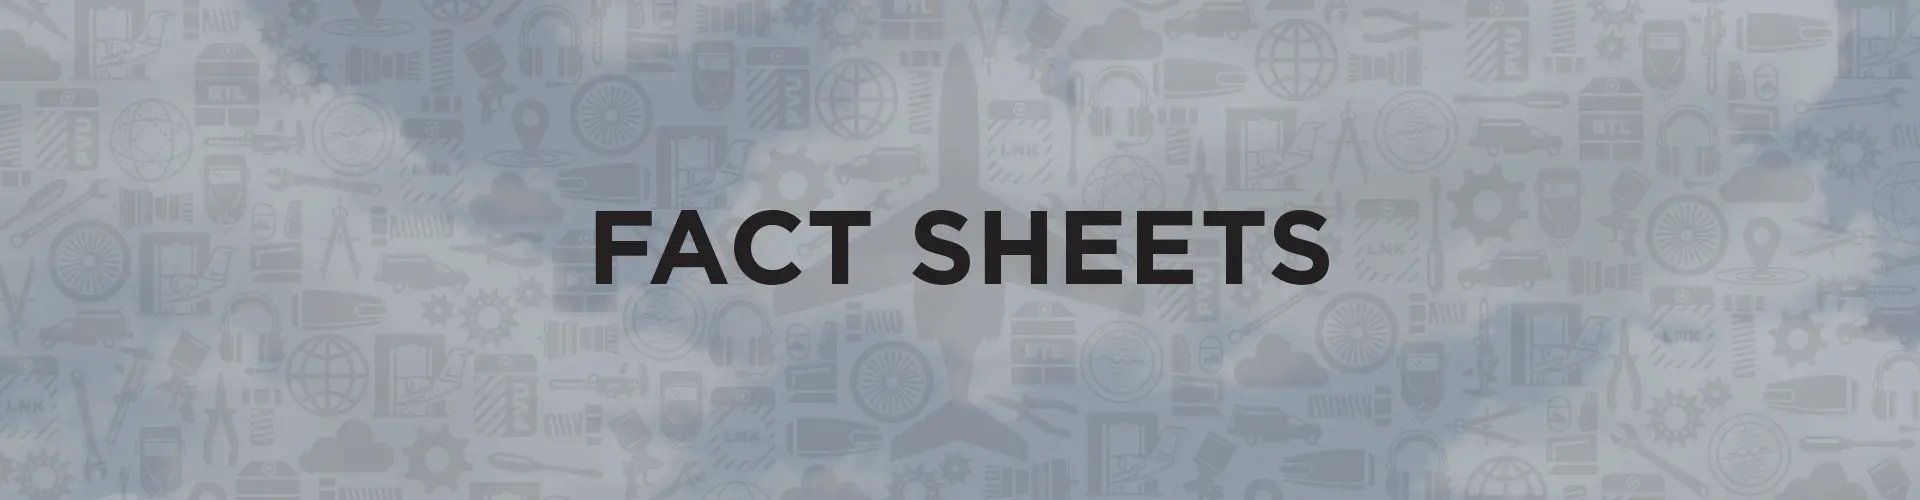 Resources_header-fact_sheets.jpg